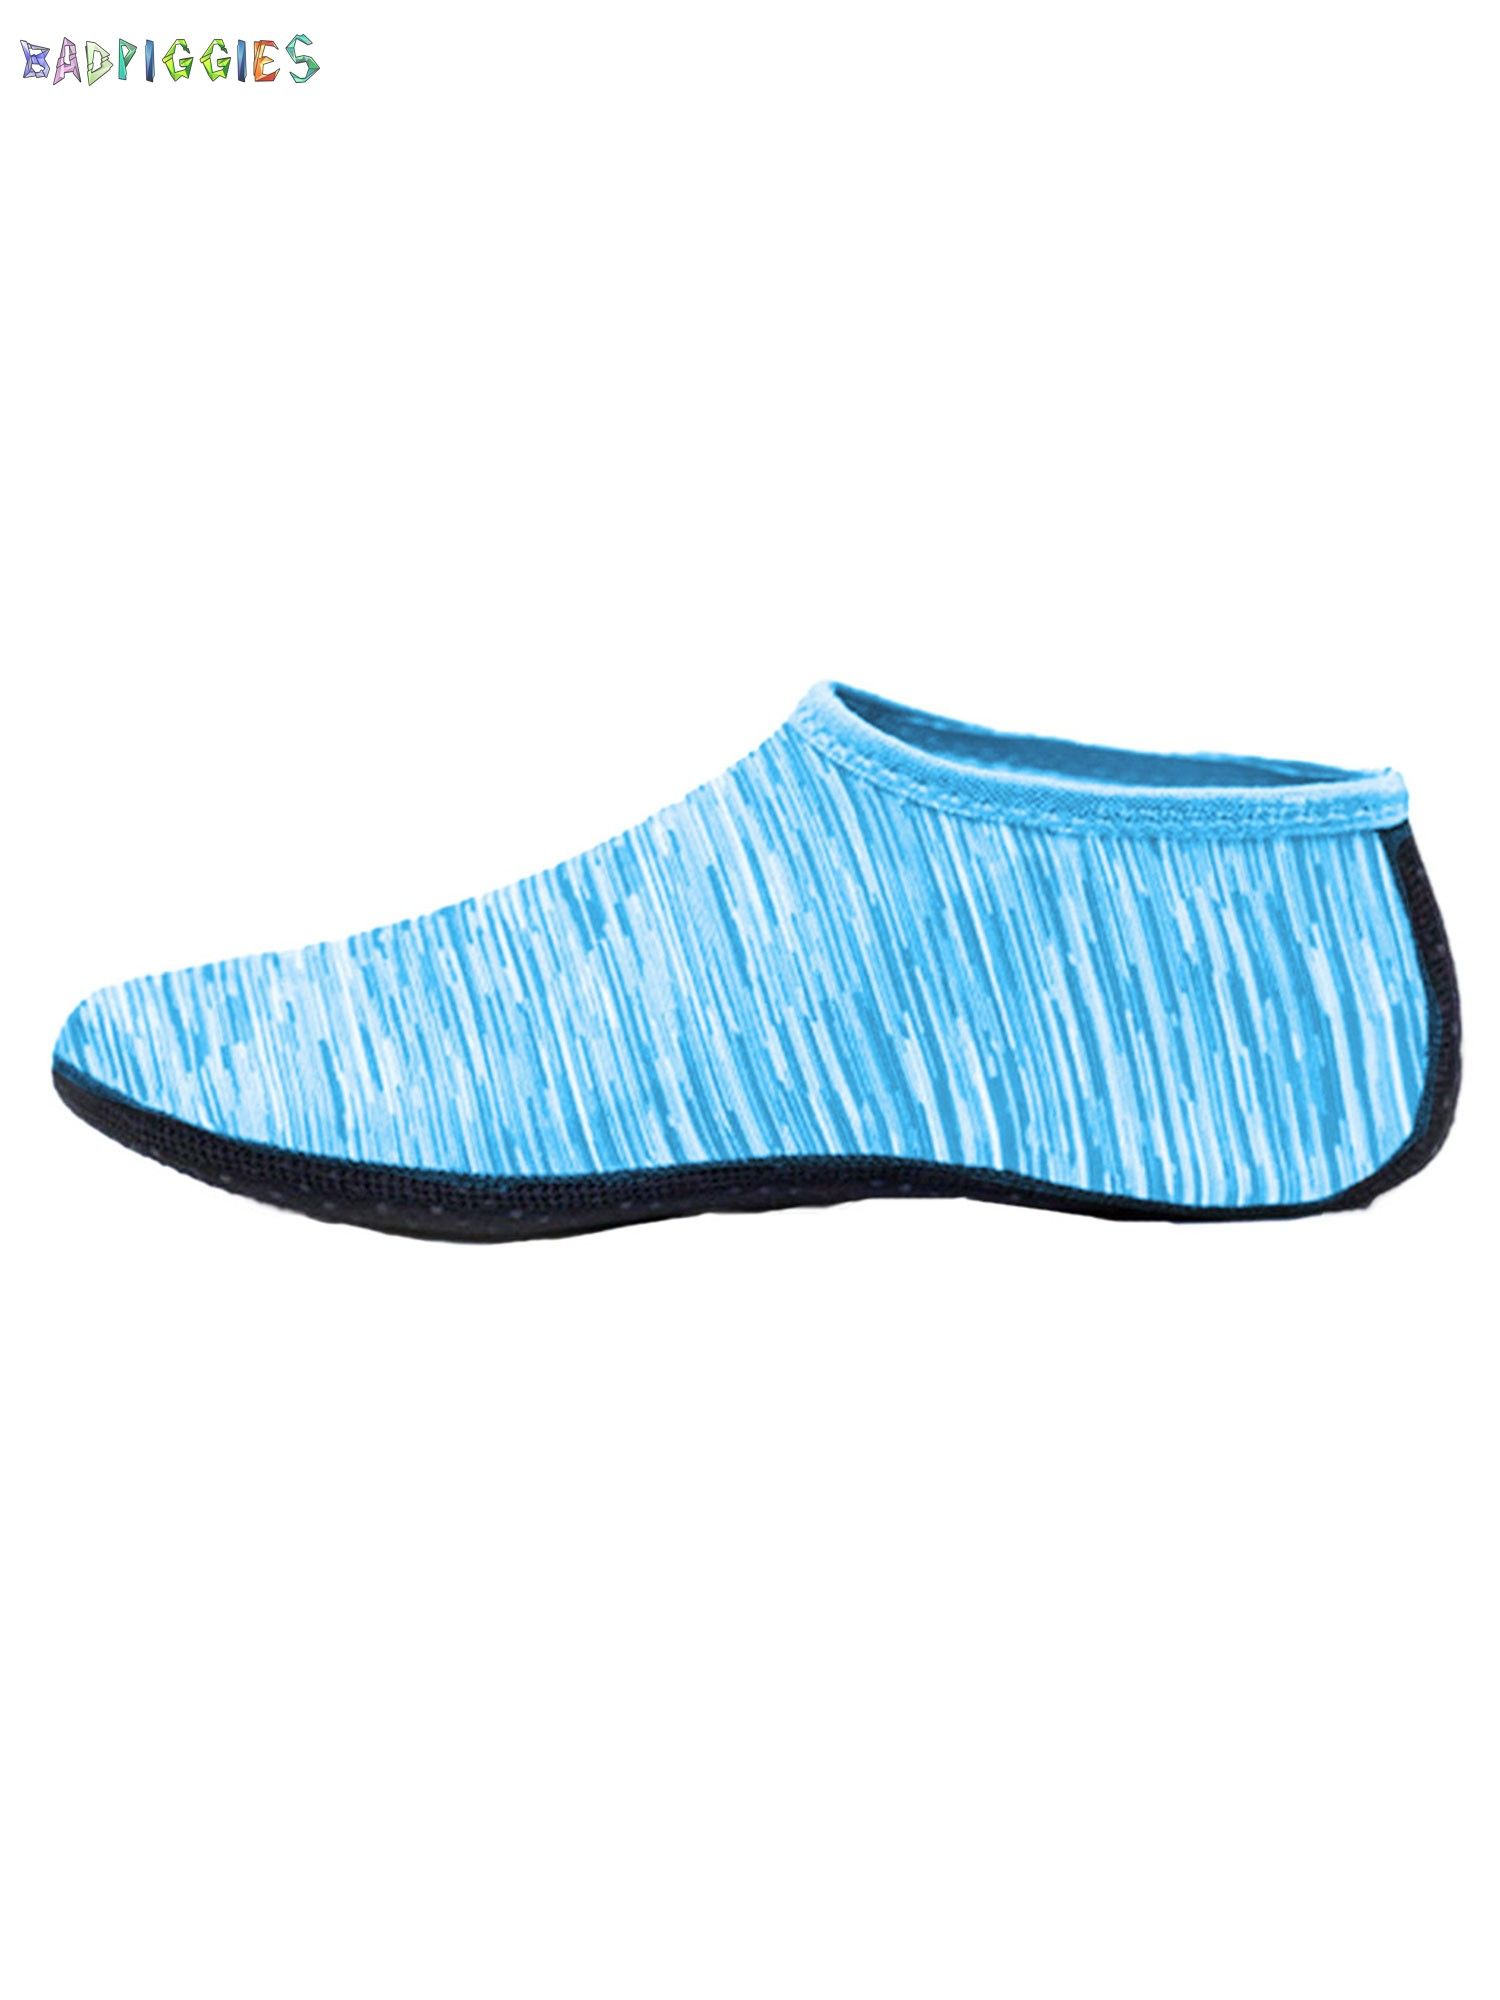 BadPiggies Water Socks Sports Beach Barefoot Quick-Dry Aqua Yoga Shoes Slip-on for Men Women Kids (S, Line Blue) - image 4 of 6